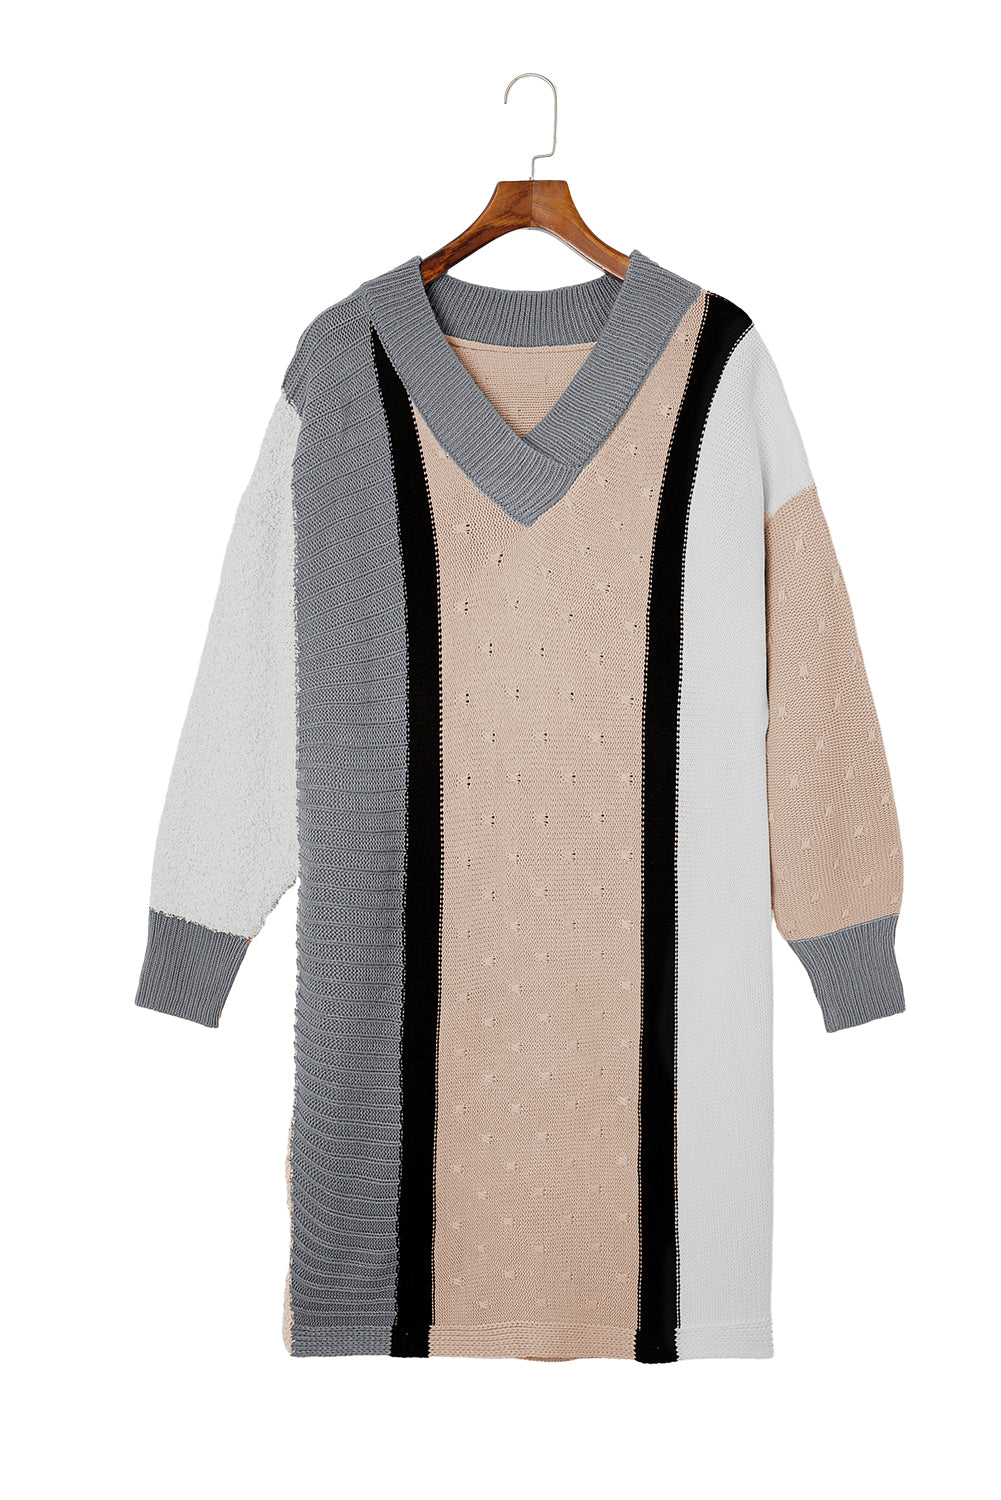 Apricot Mixed Boucl Color Block Plus Size Sweater Dress